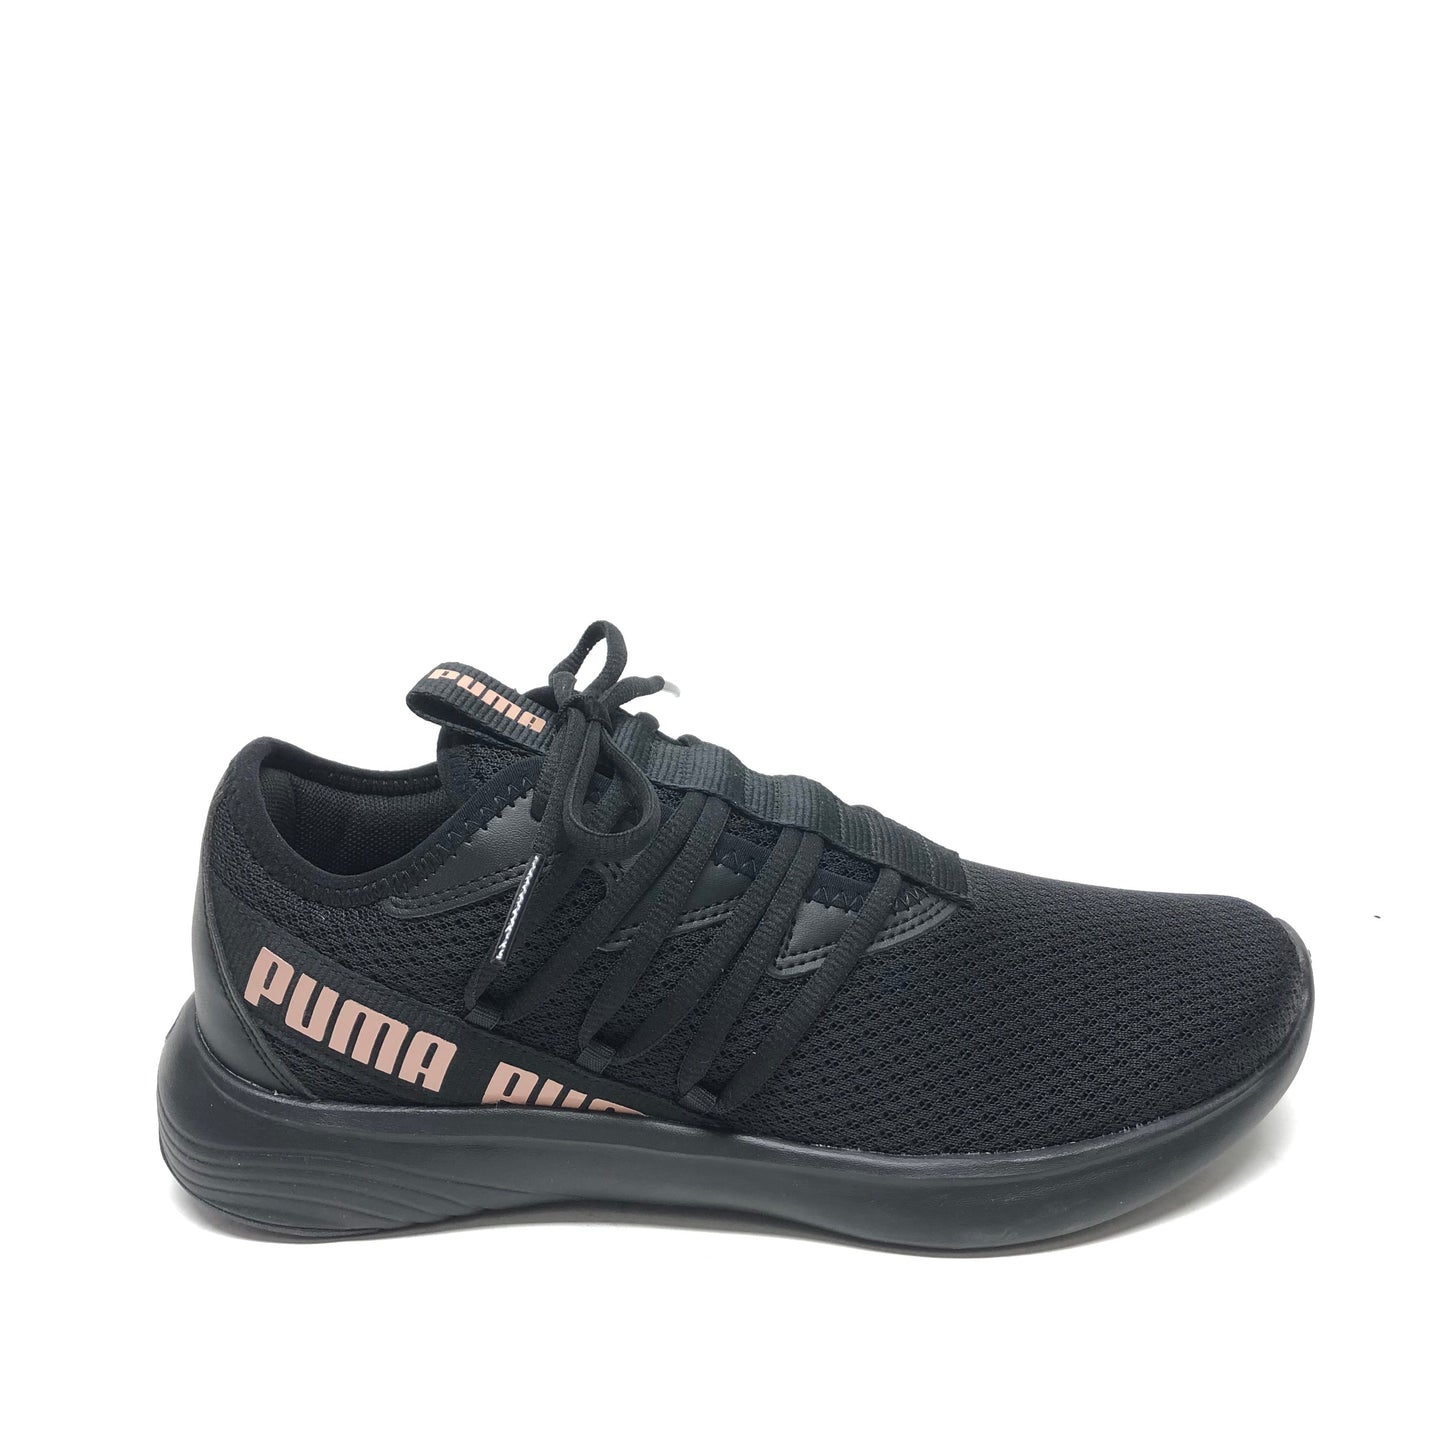 Black Shoes Athletic Puma, Size 7.5